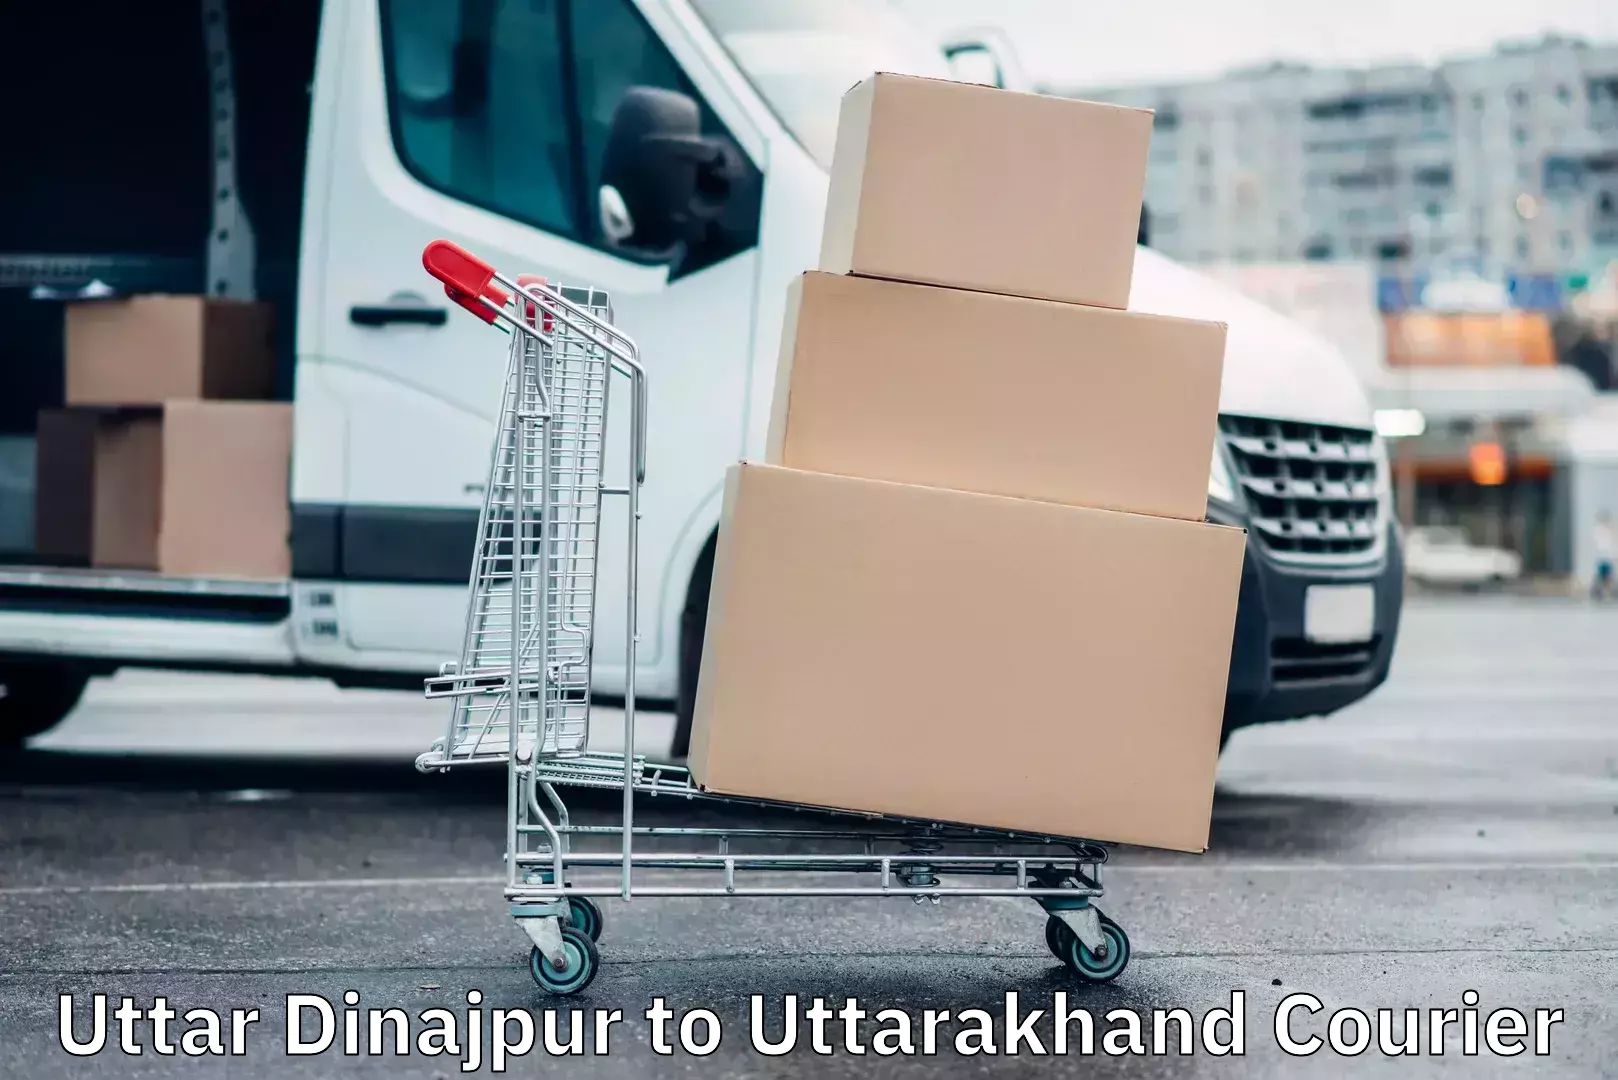 Rapid freight solutions Uttar Dinajpur to Uttarakhand